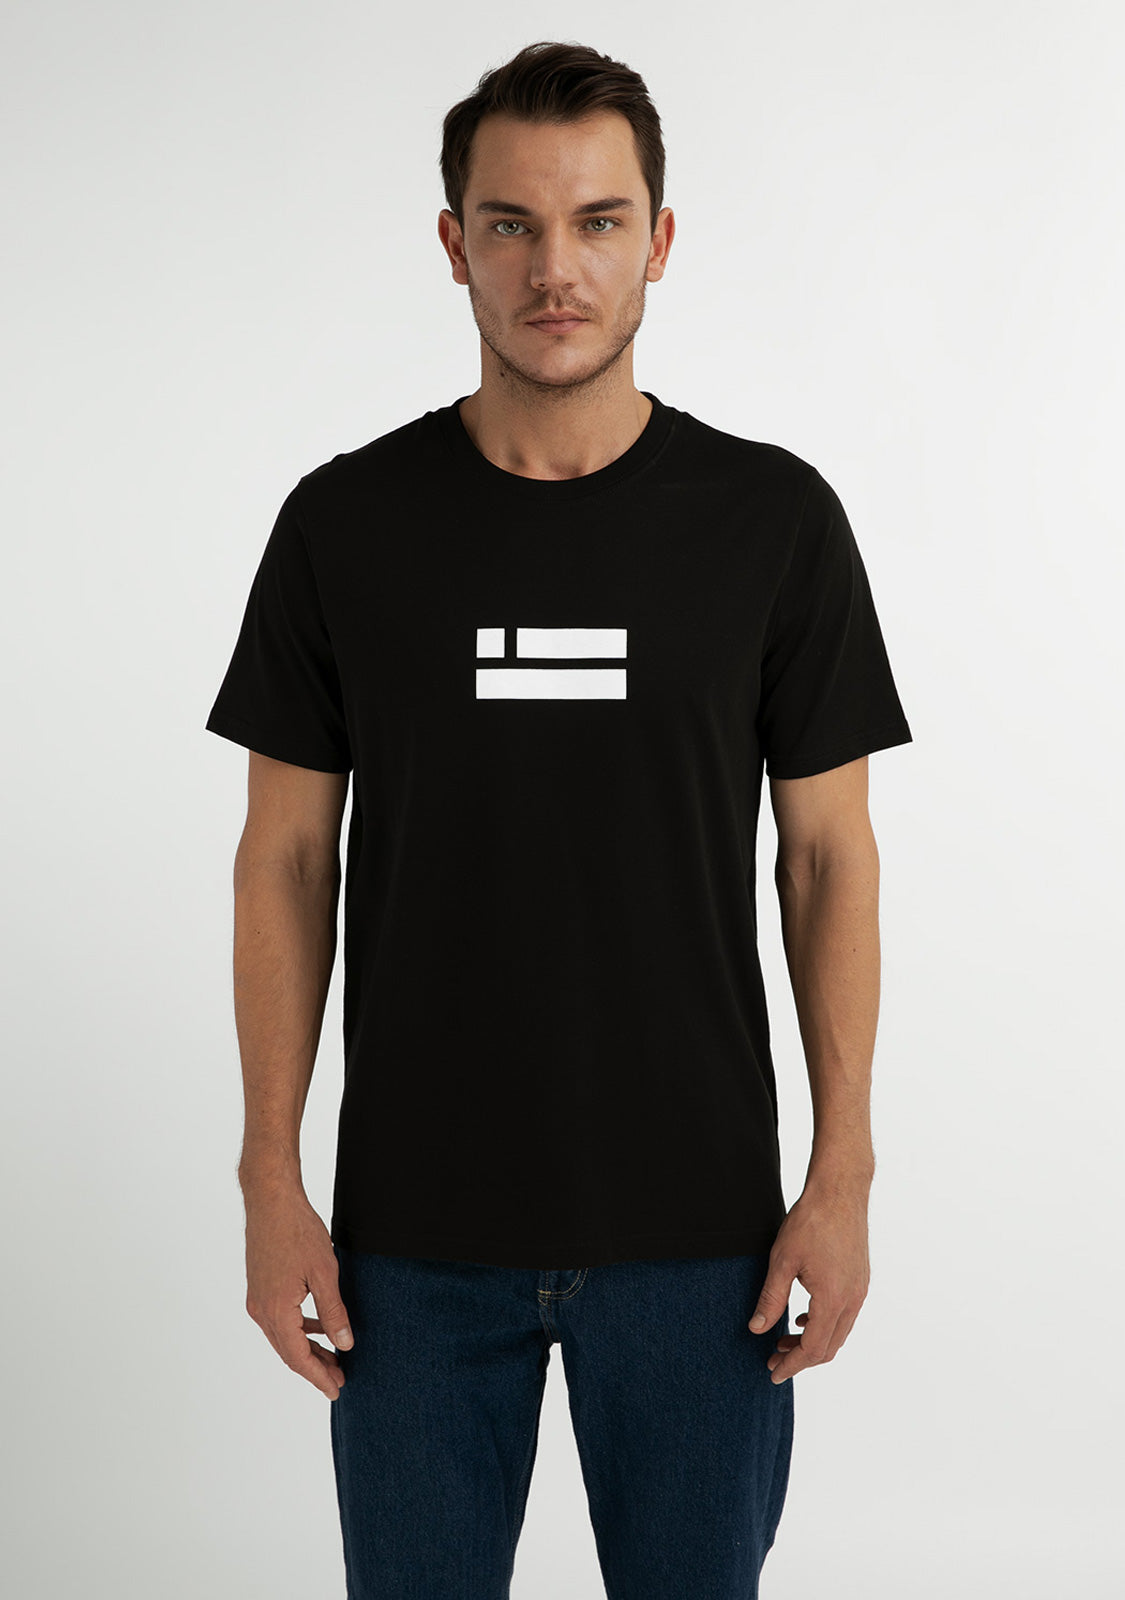 Flag T-Shirt Black / White